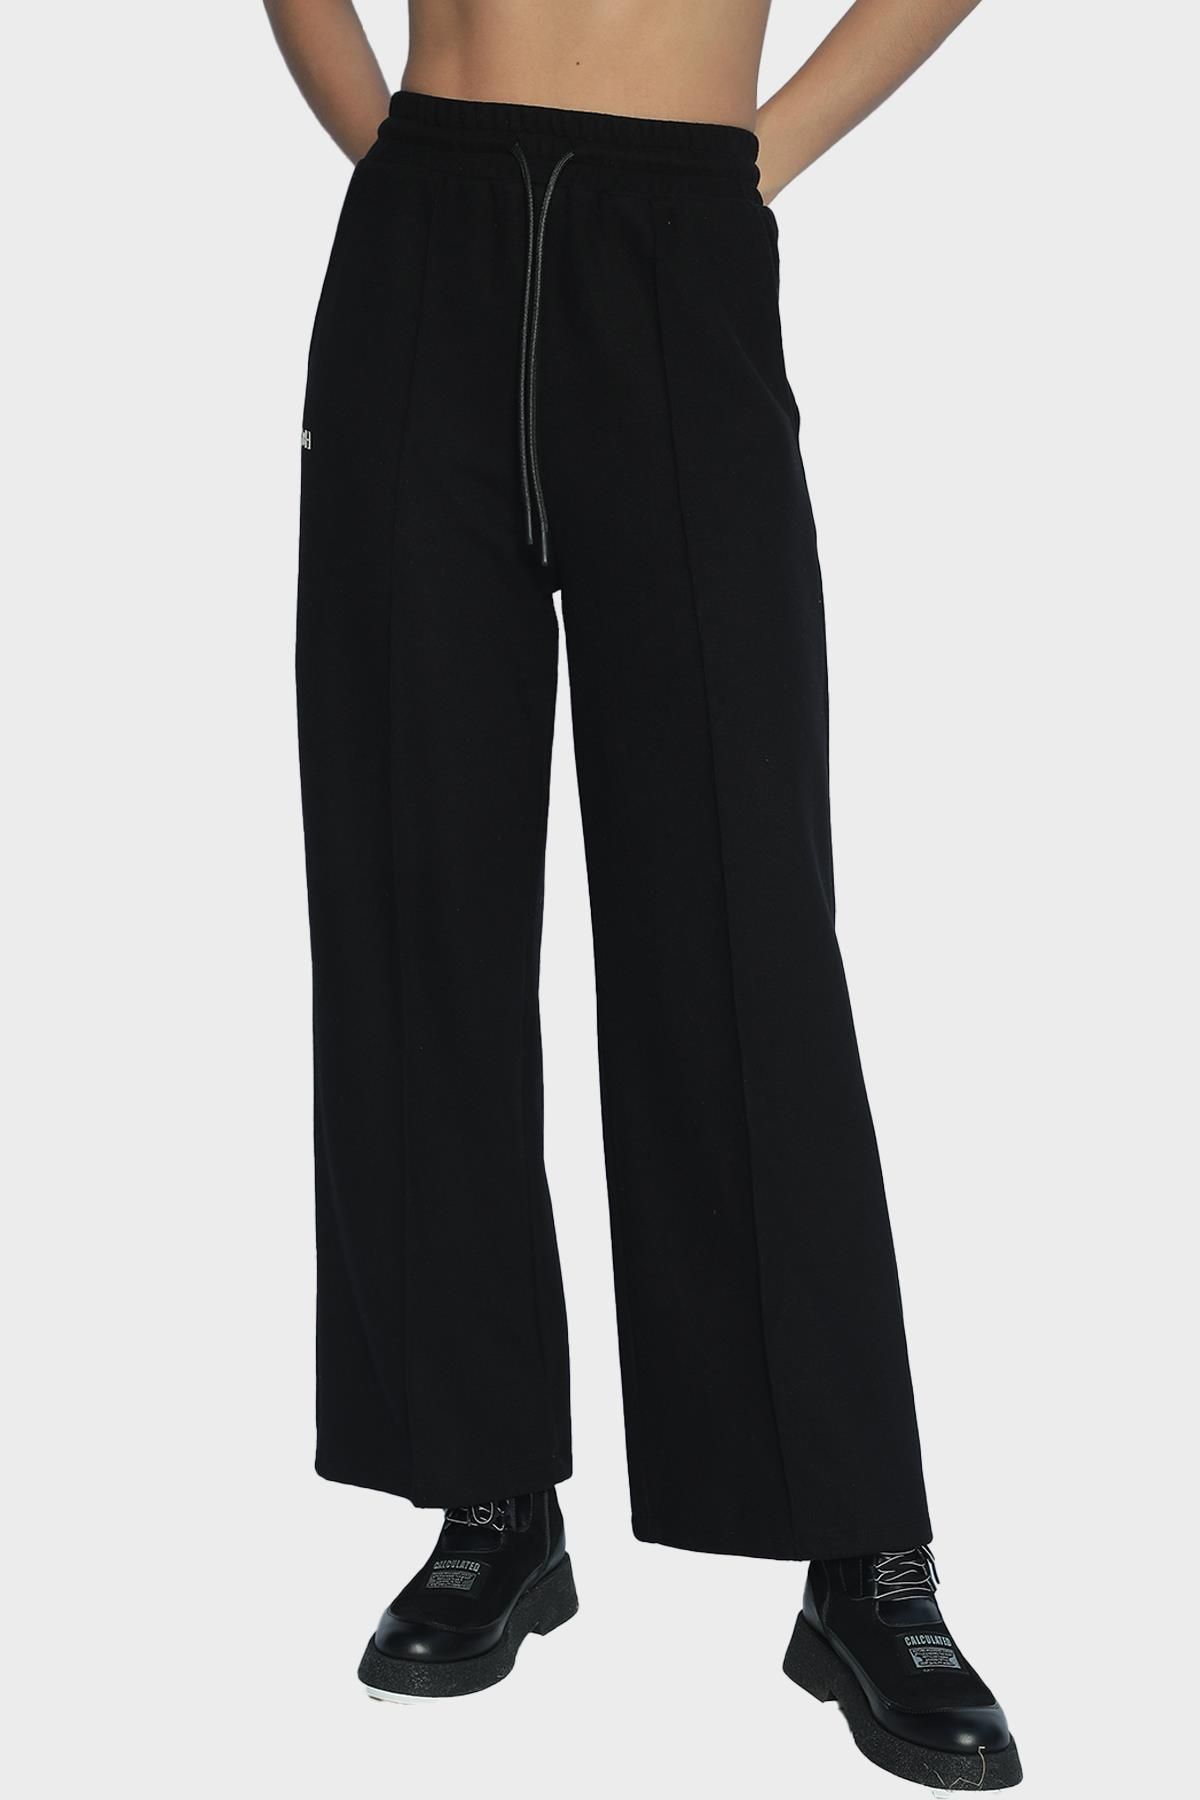 Kadın yüksek bel geniş paça pamuklu pantolon - Siyah